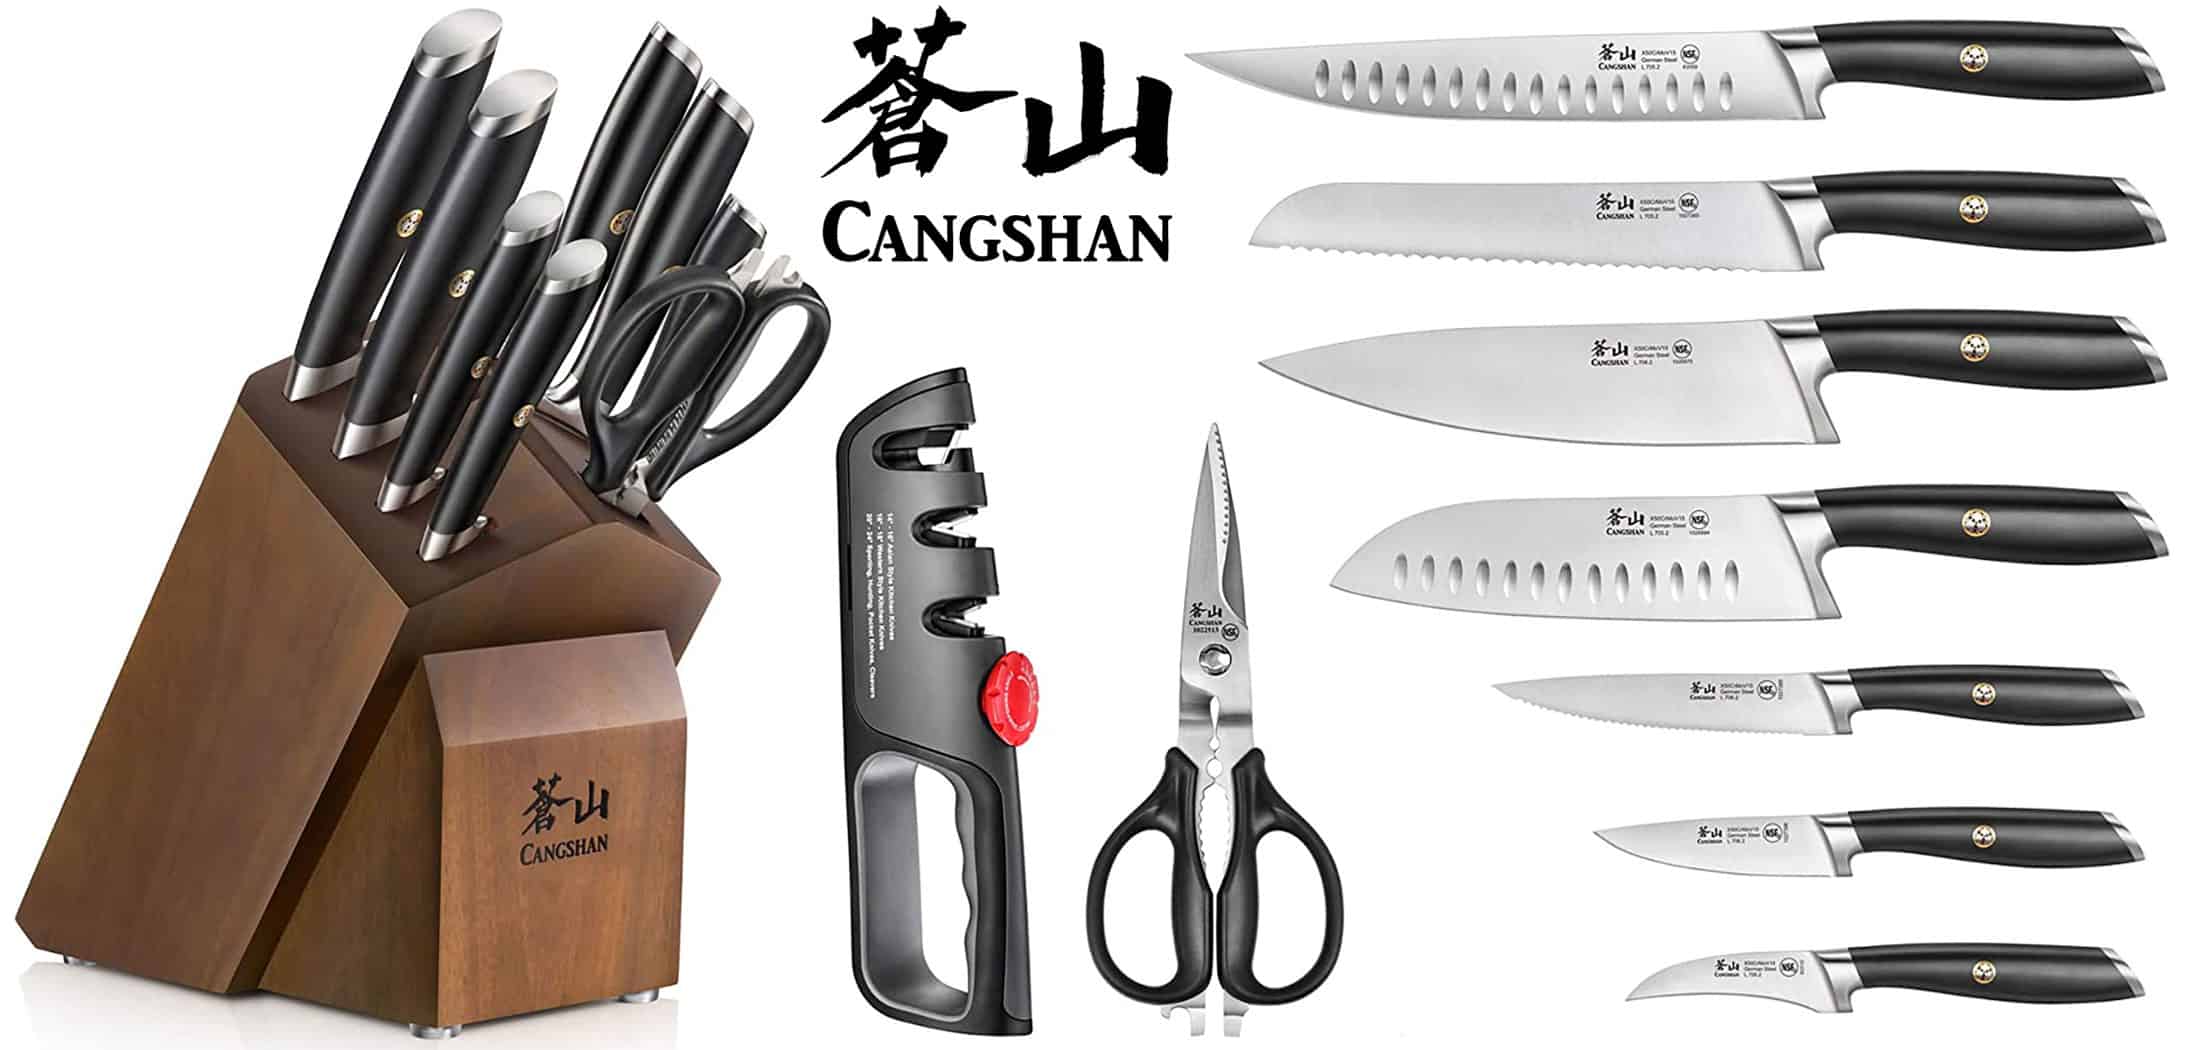 Cangshan L1 Series 10 piece Knife Set